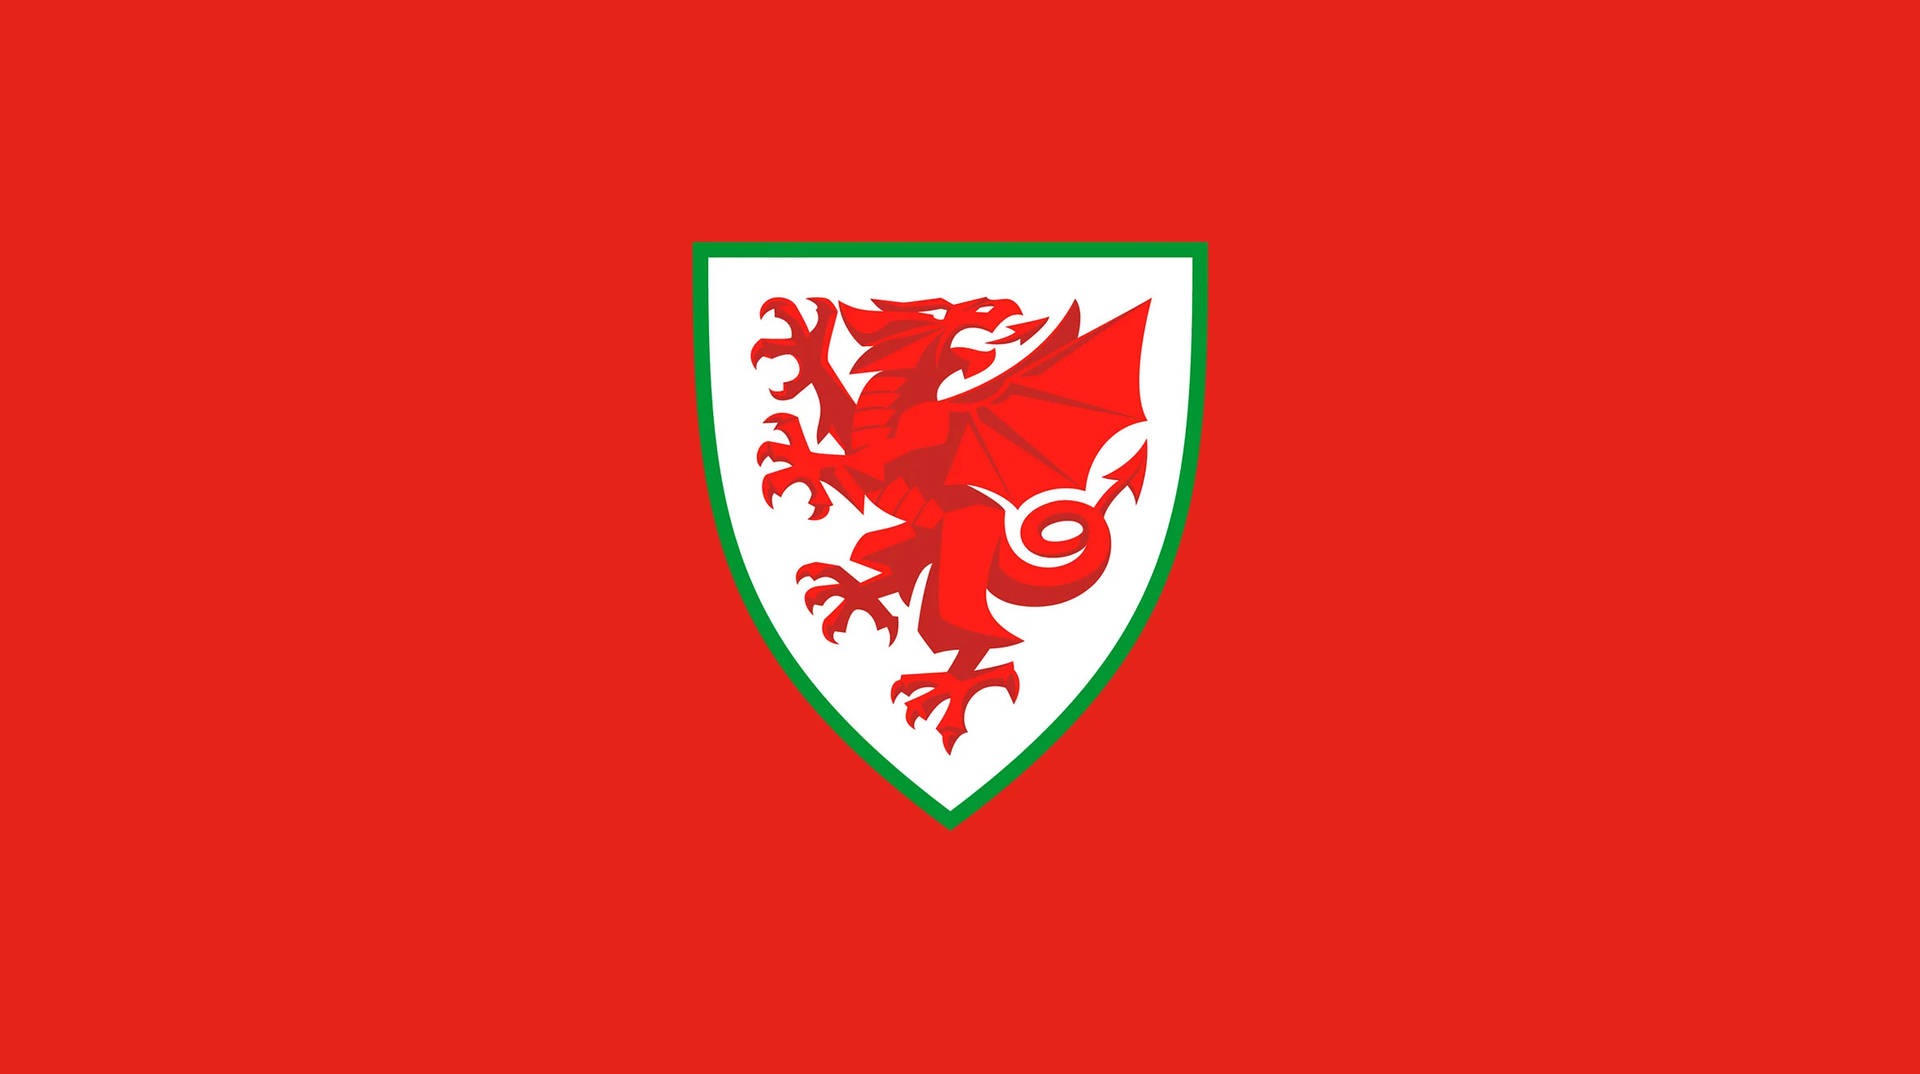 Wales National Football Team Shield Emblem